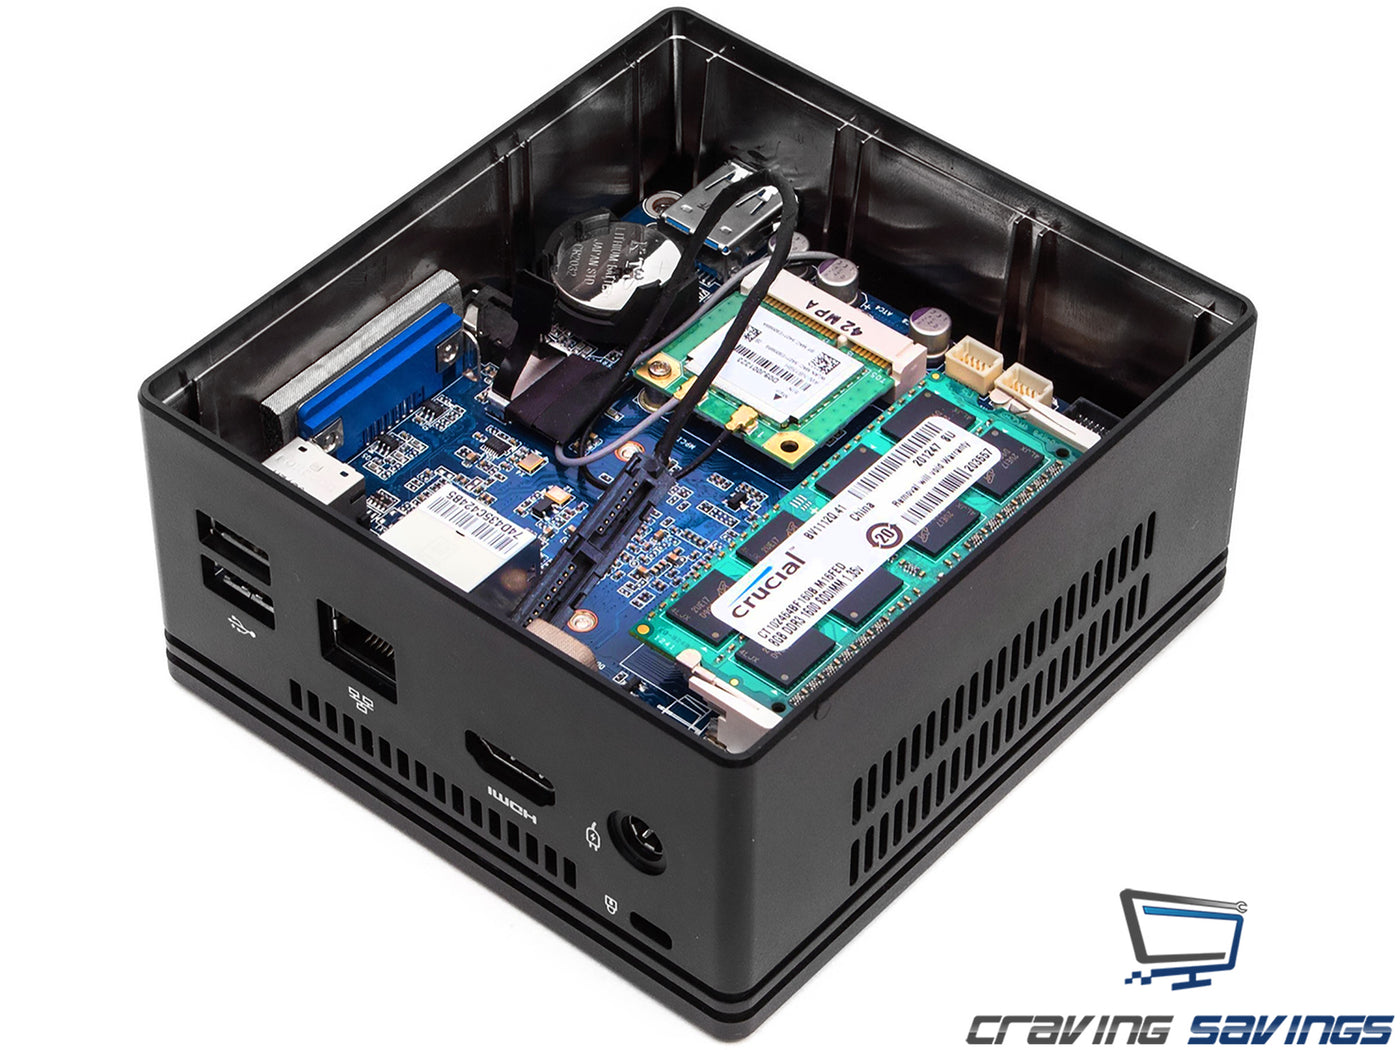 GIGABYTE BRIX GB-BXBT-2087 Ultra Compact PC, Celeron N2807, 4GB – PCs